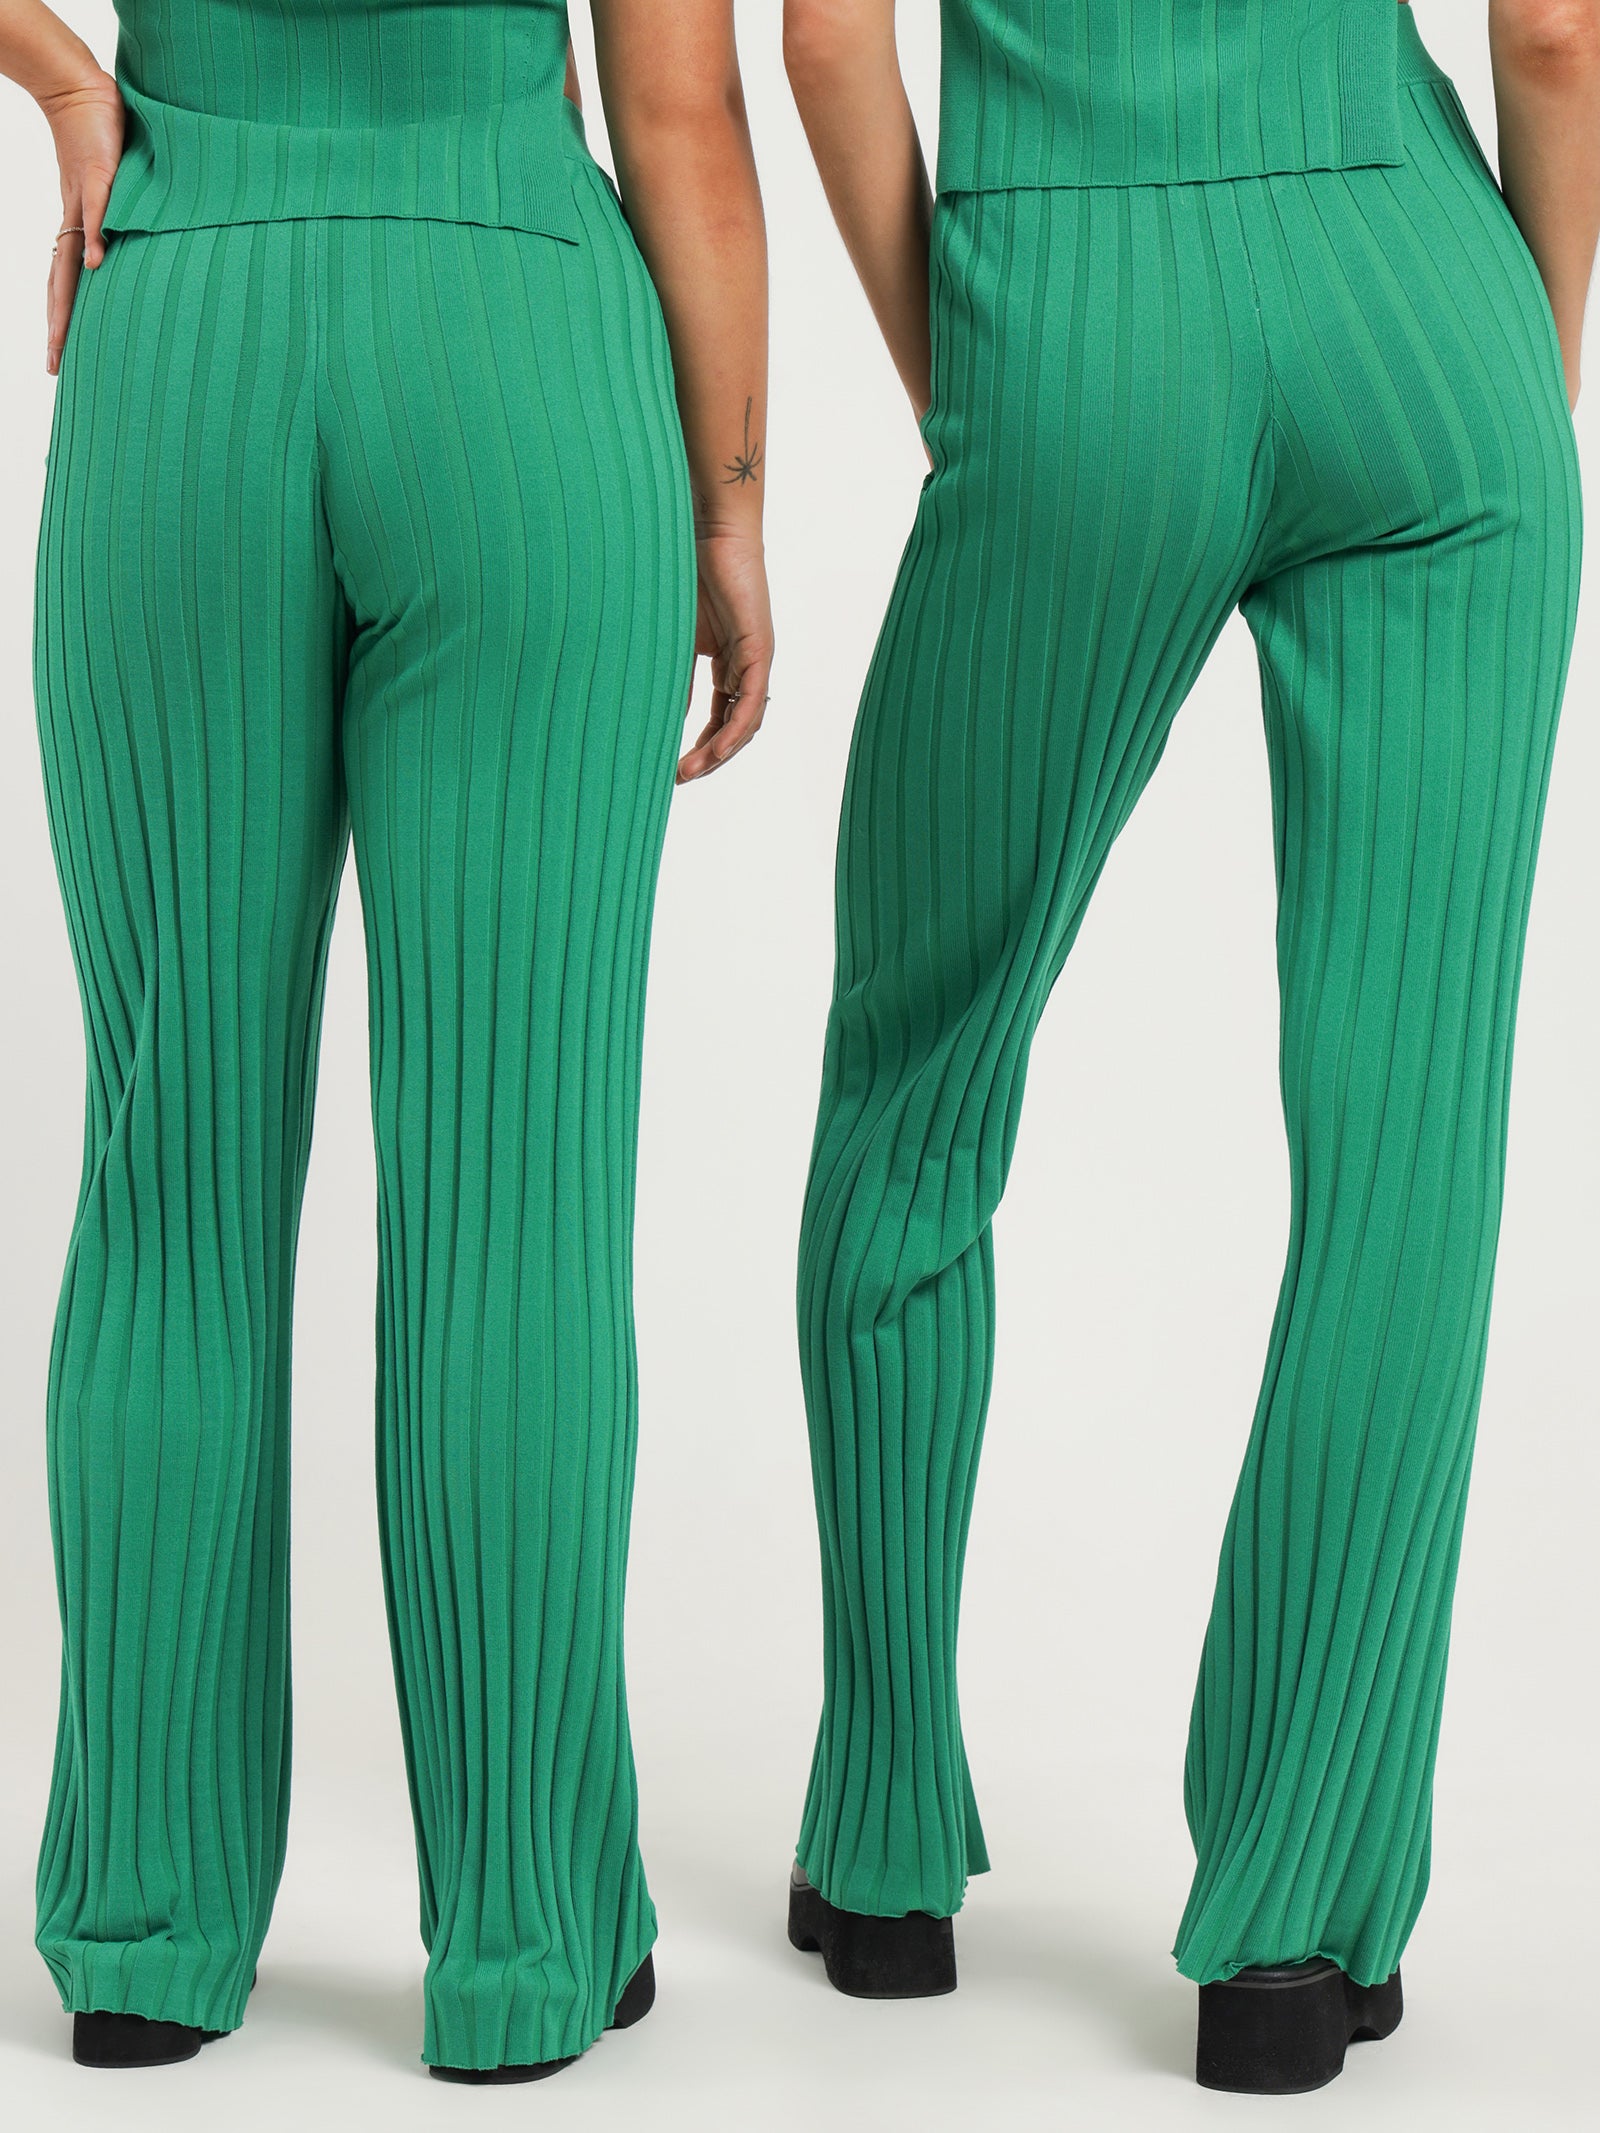 Tenata Knit Pants in Parakeet Green